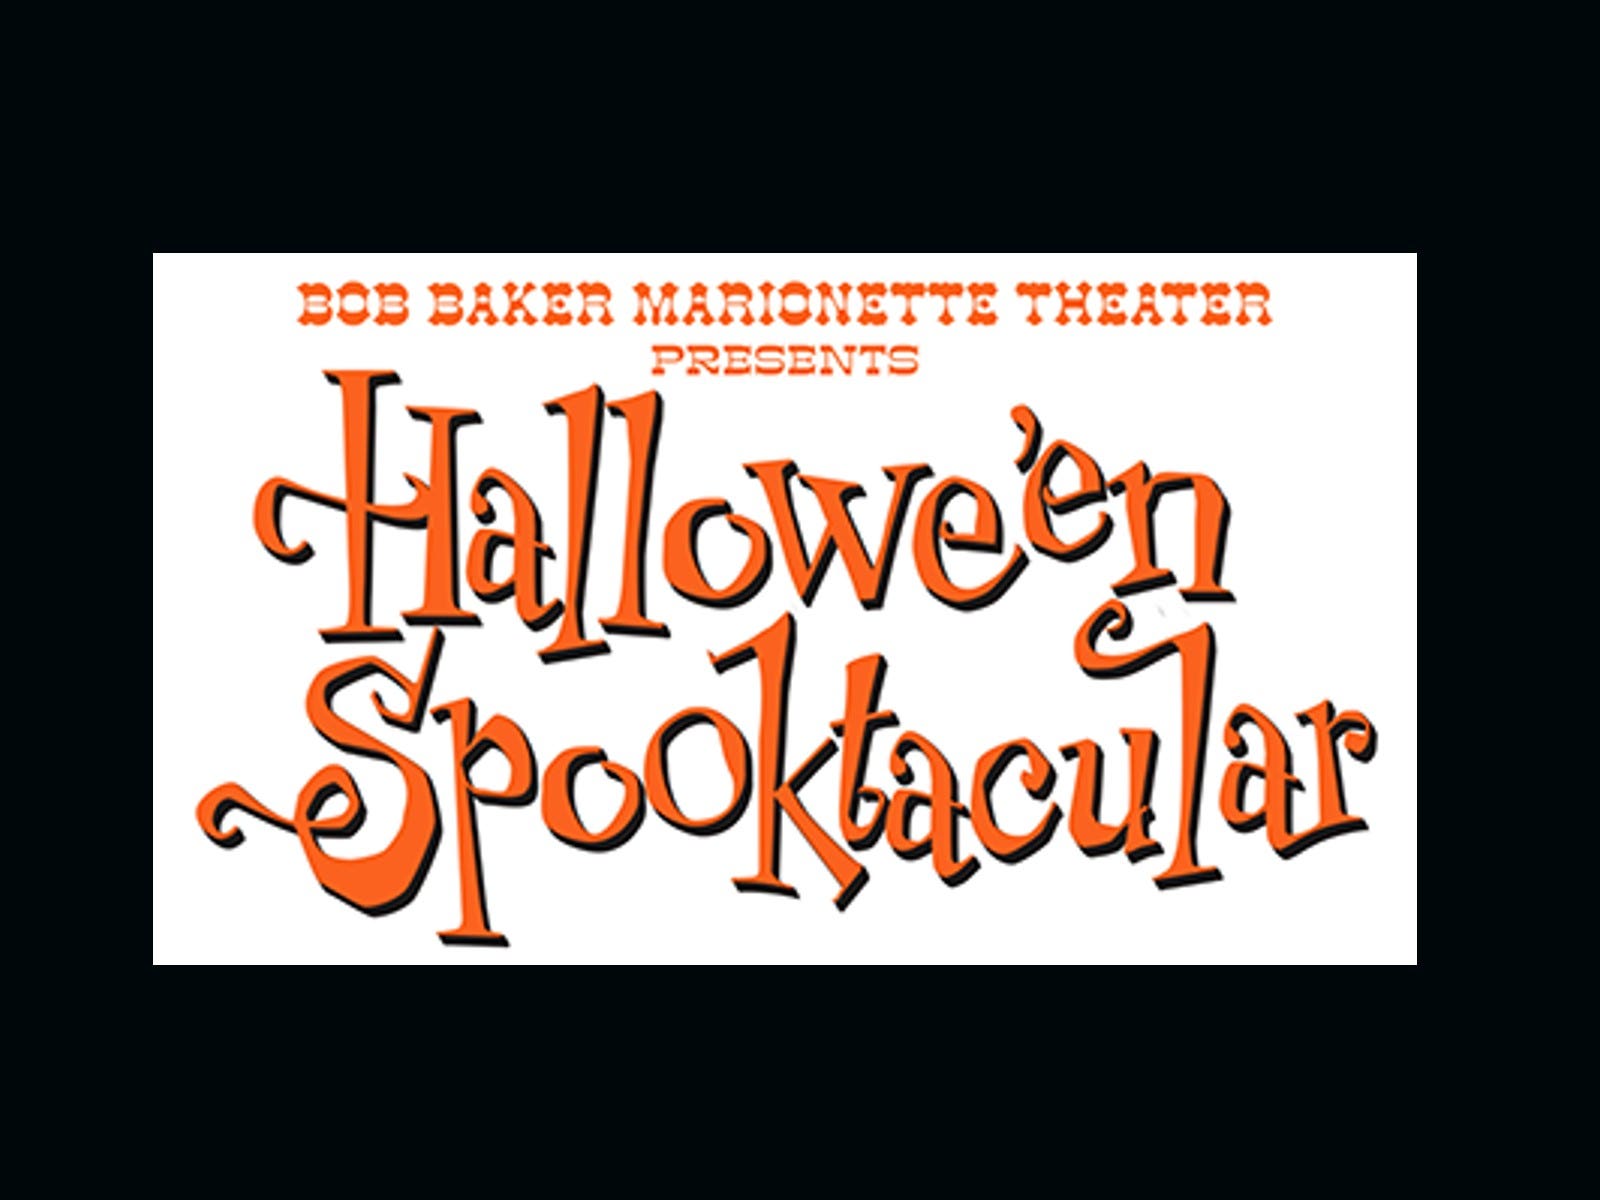 Main image for event titled Bob Baker's Hallowe’en Spooktacular (OPENING DAY)